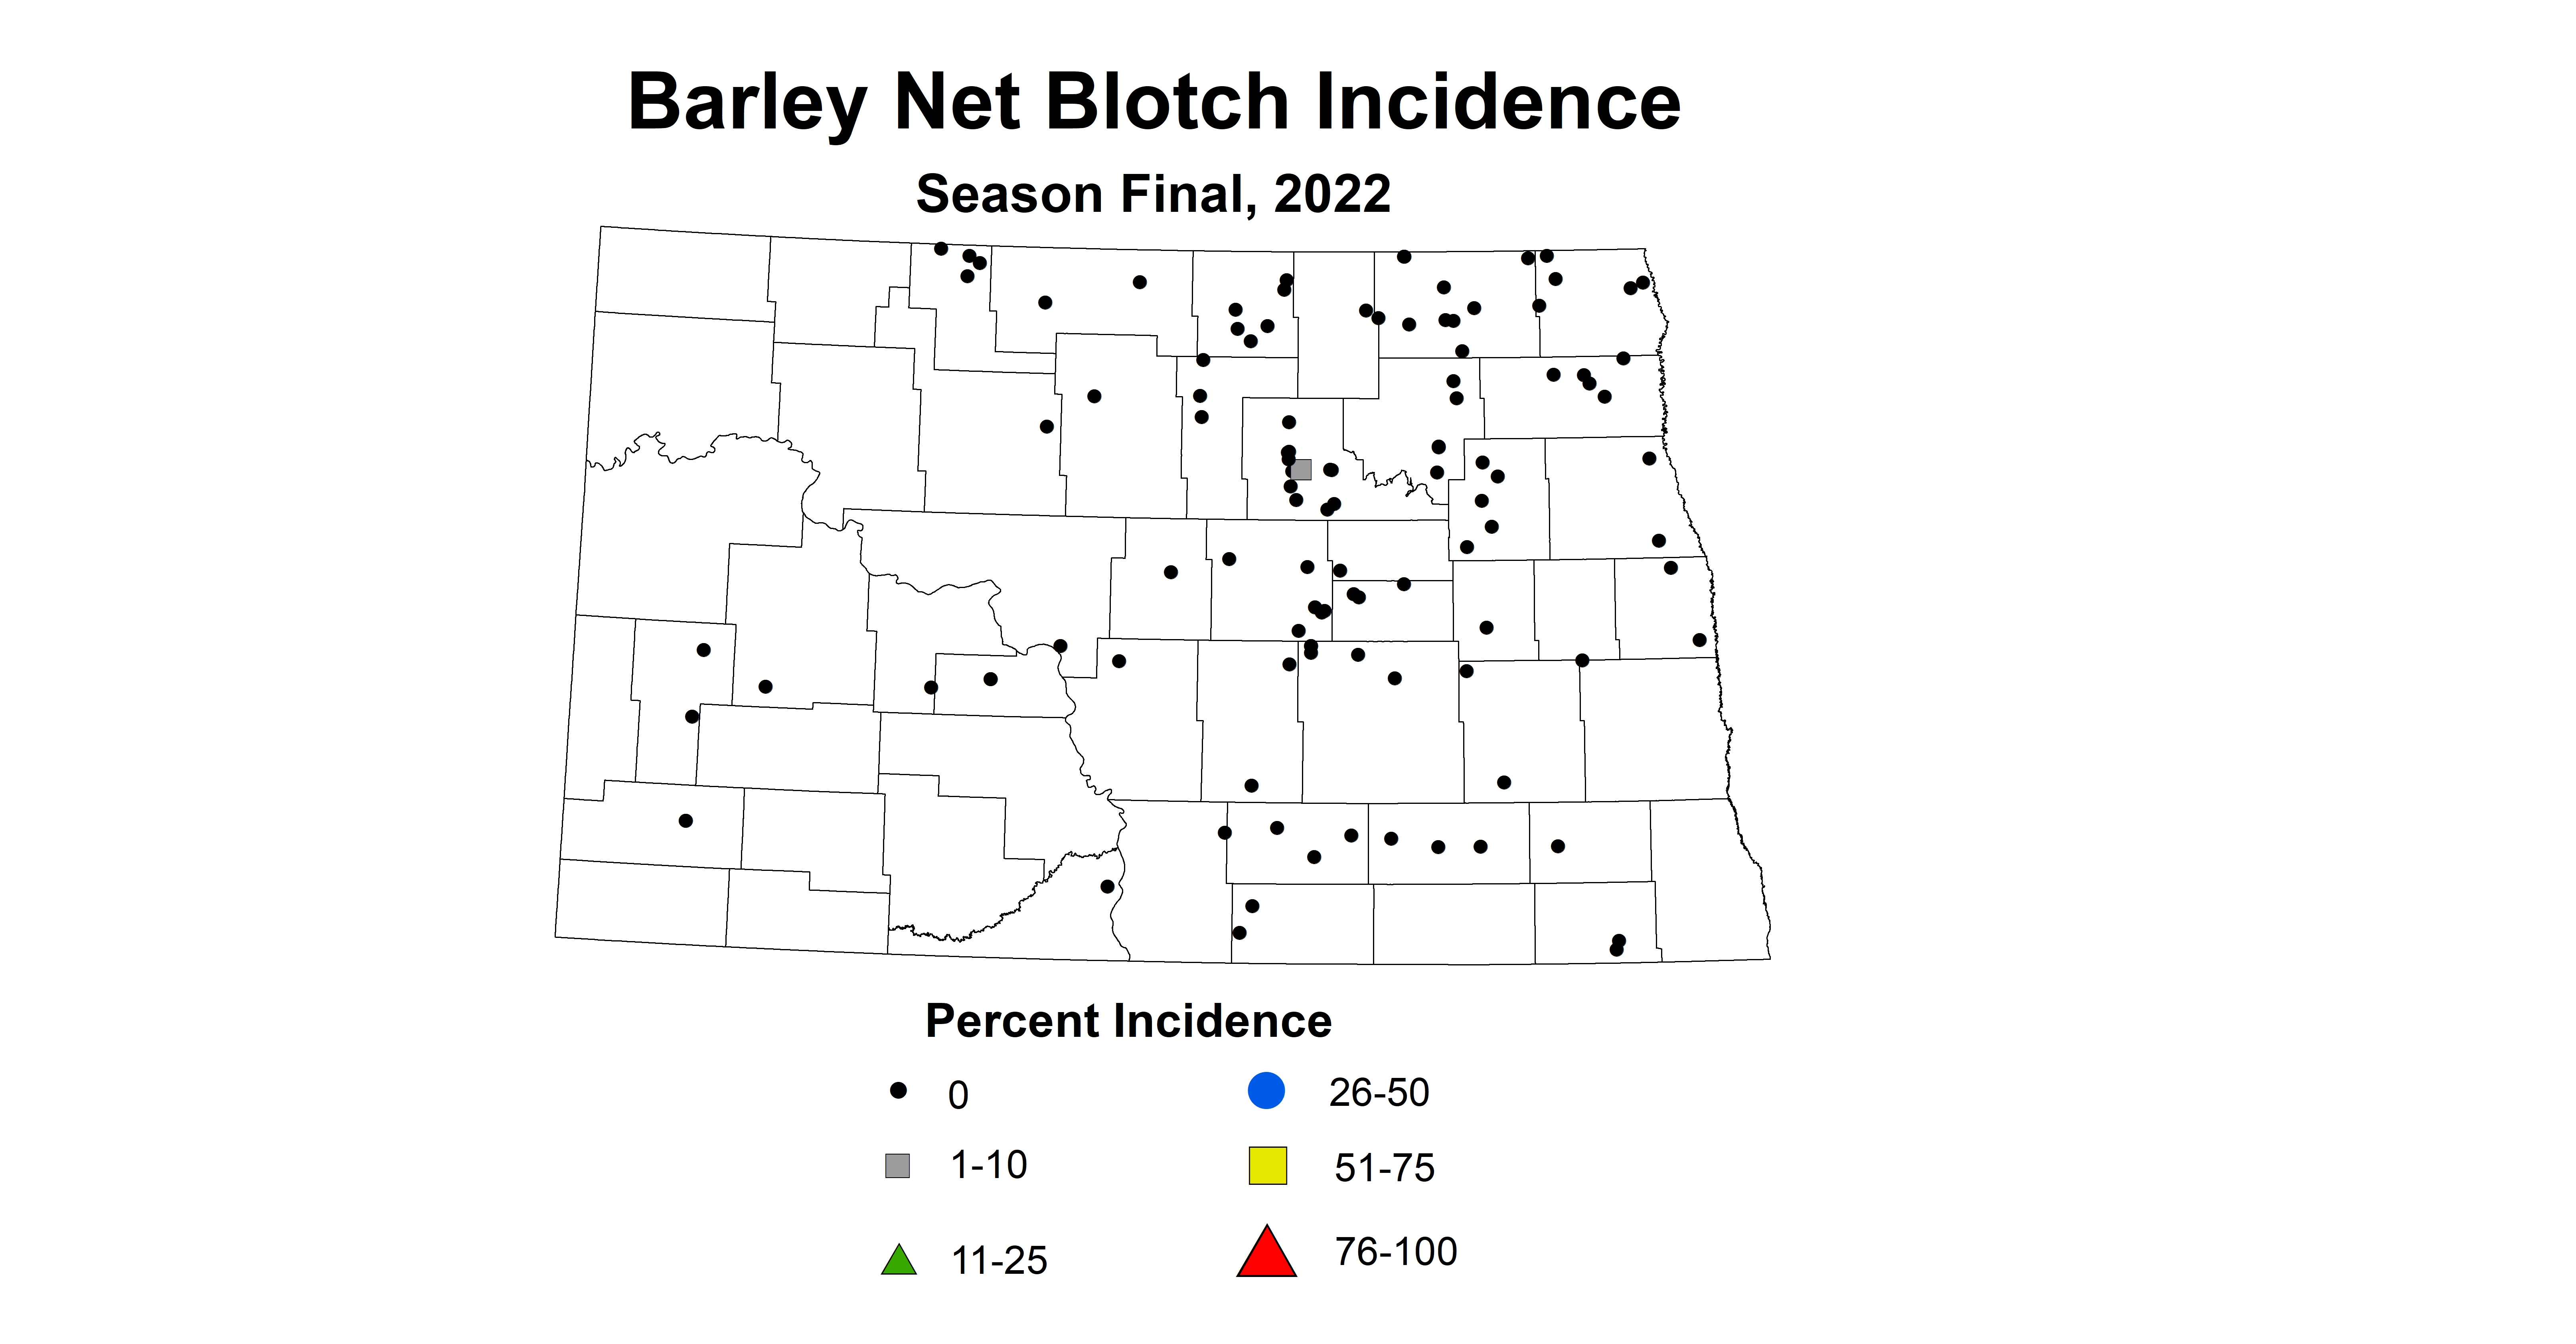 barley net blotch incidence 2022 season final